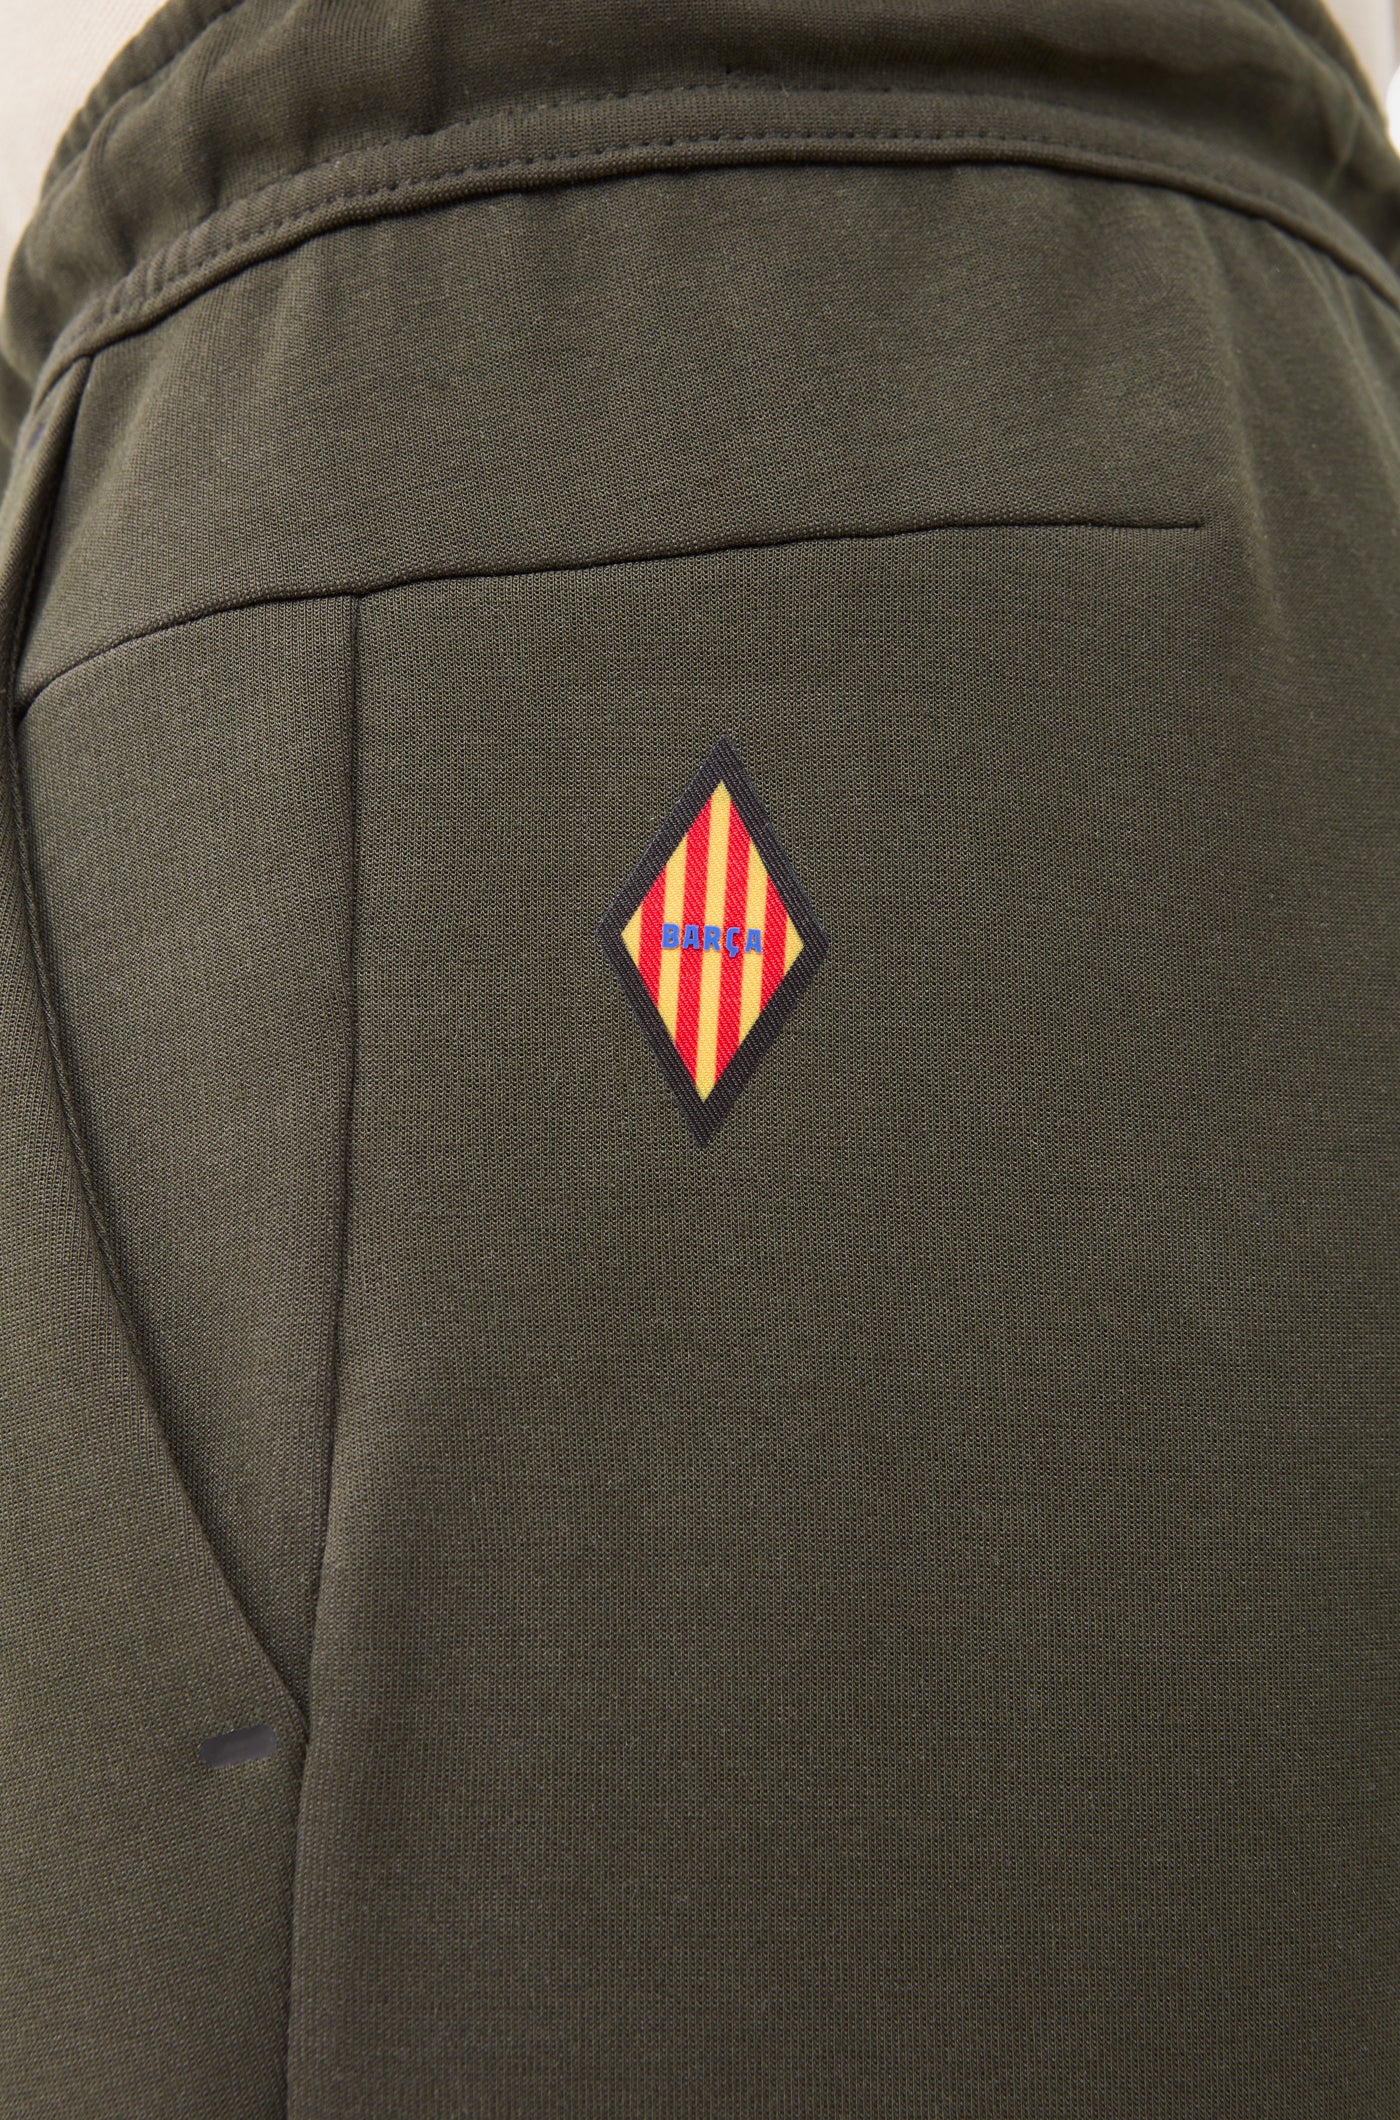 Tech Barça Nike Pants – Barça Official Store Spotify Camp Nou